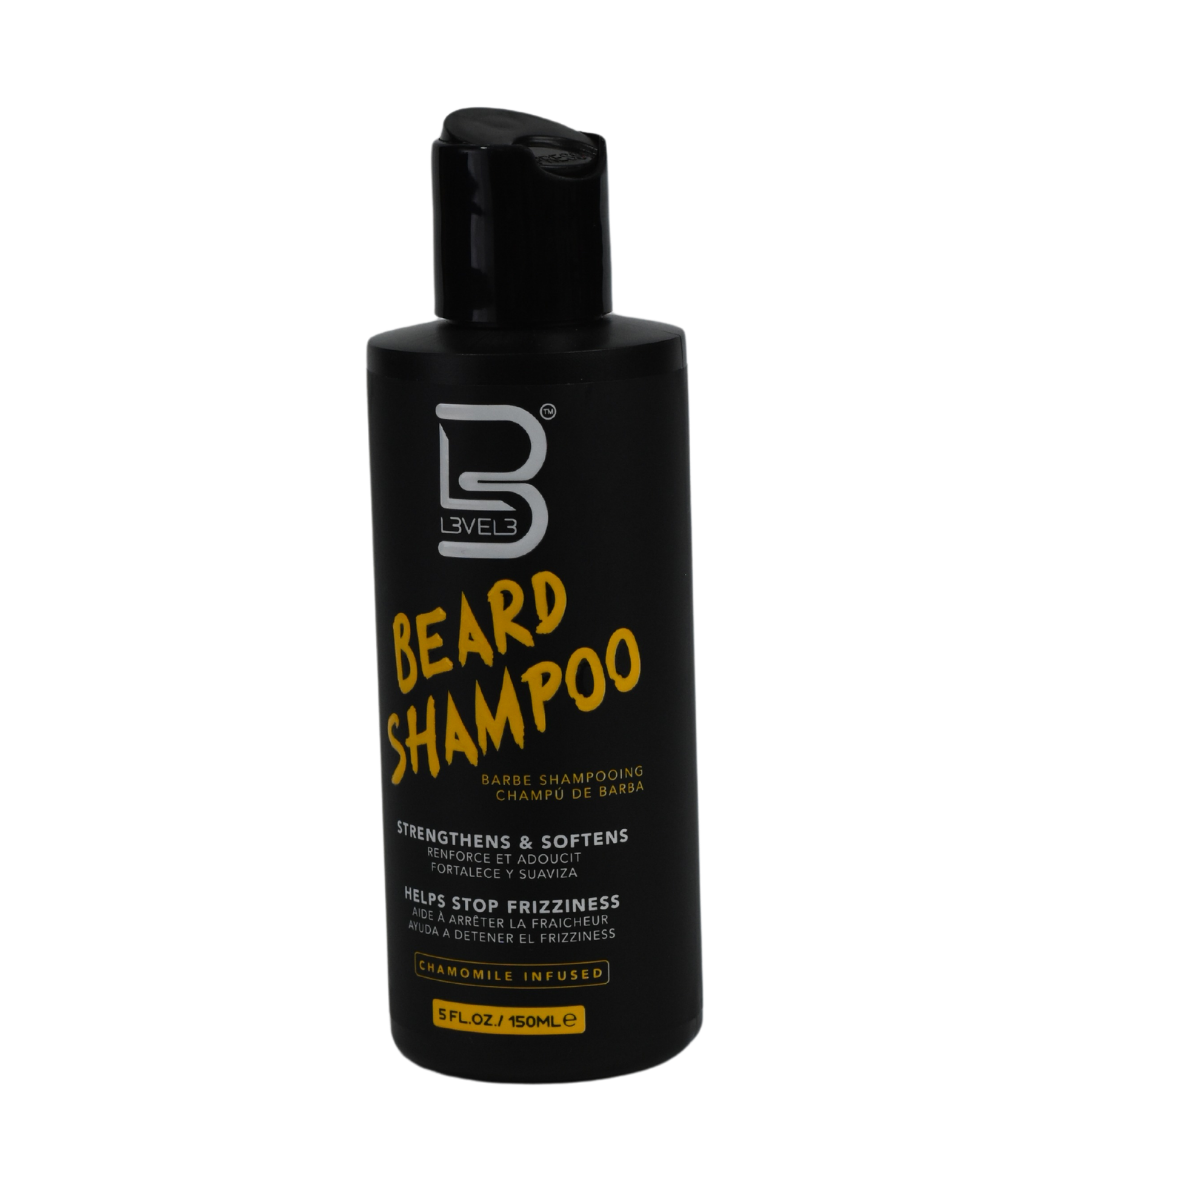 Shampoo de barba L3vel3 150ml